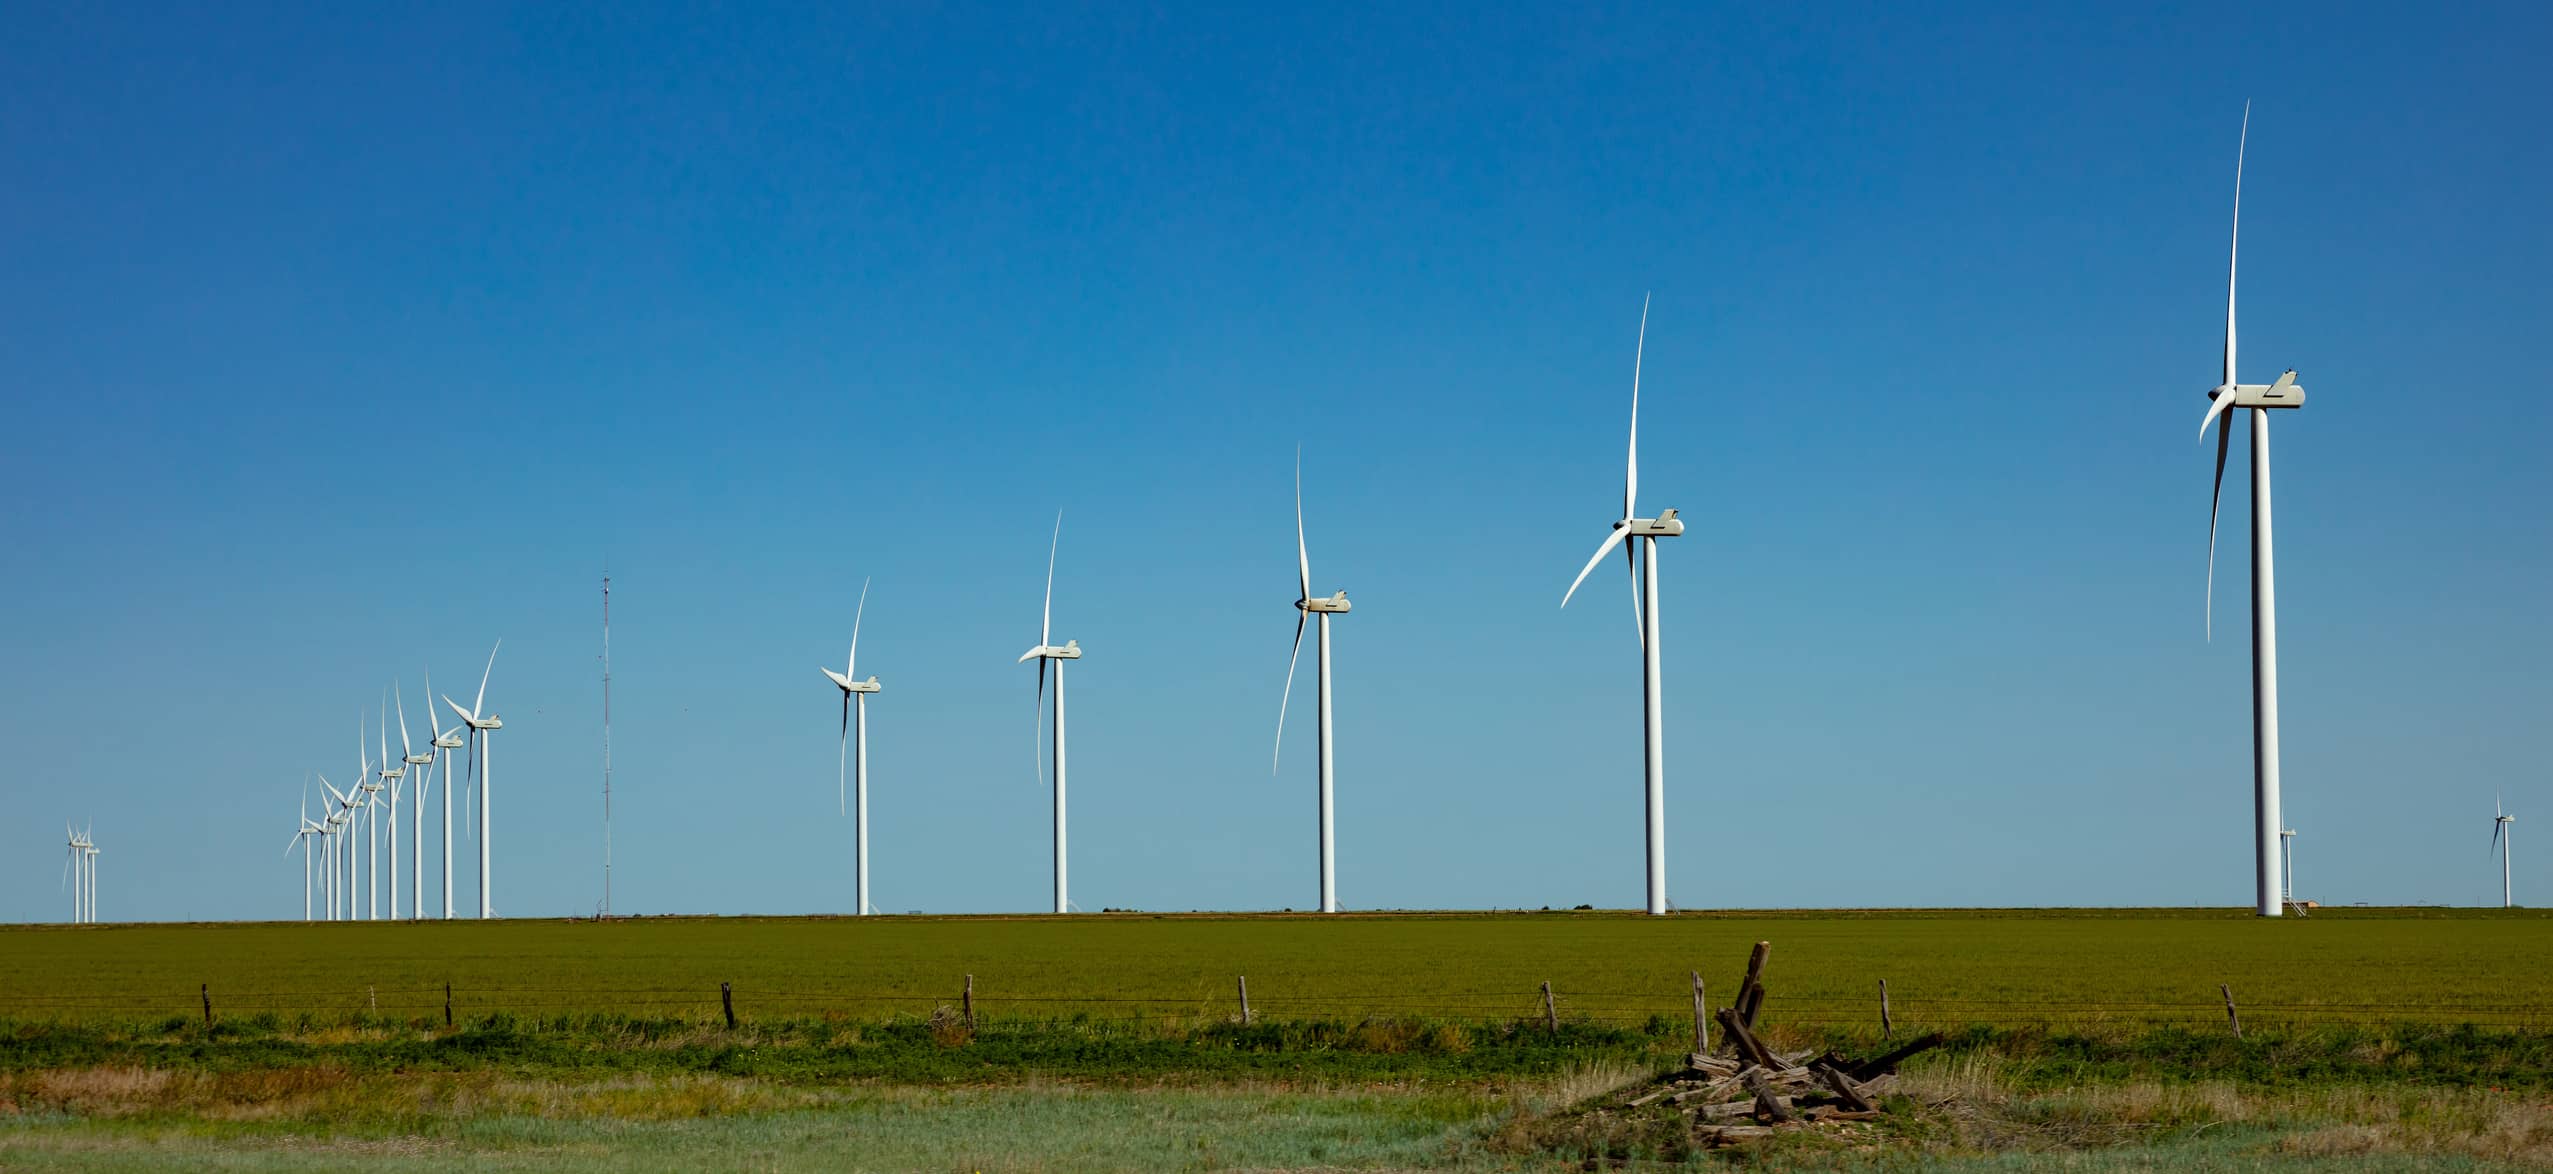 Wind farm, New Mexico, USA.